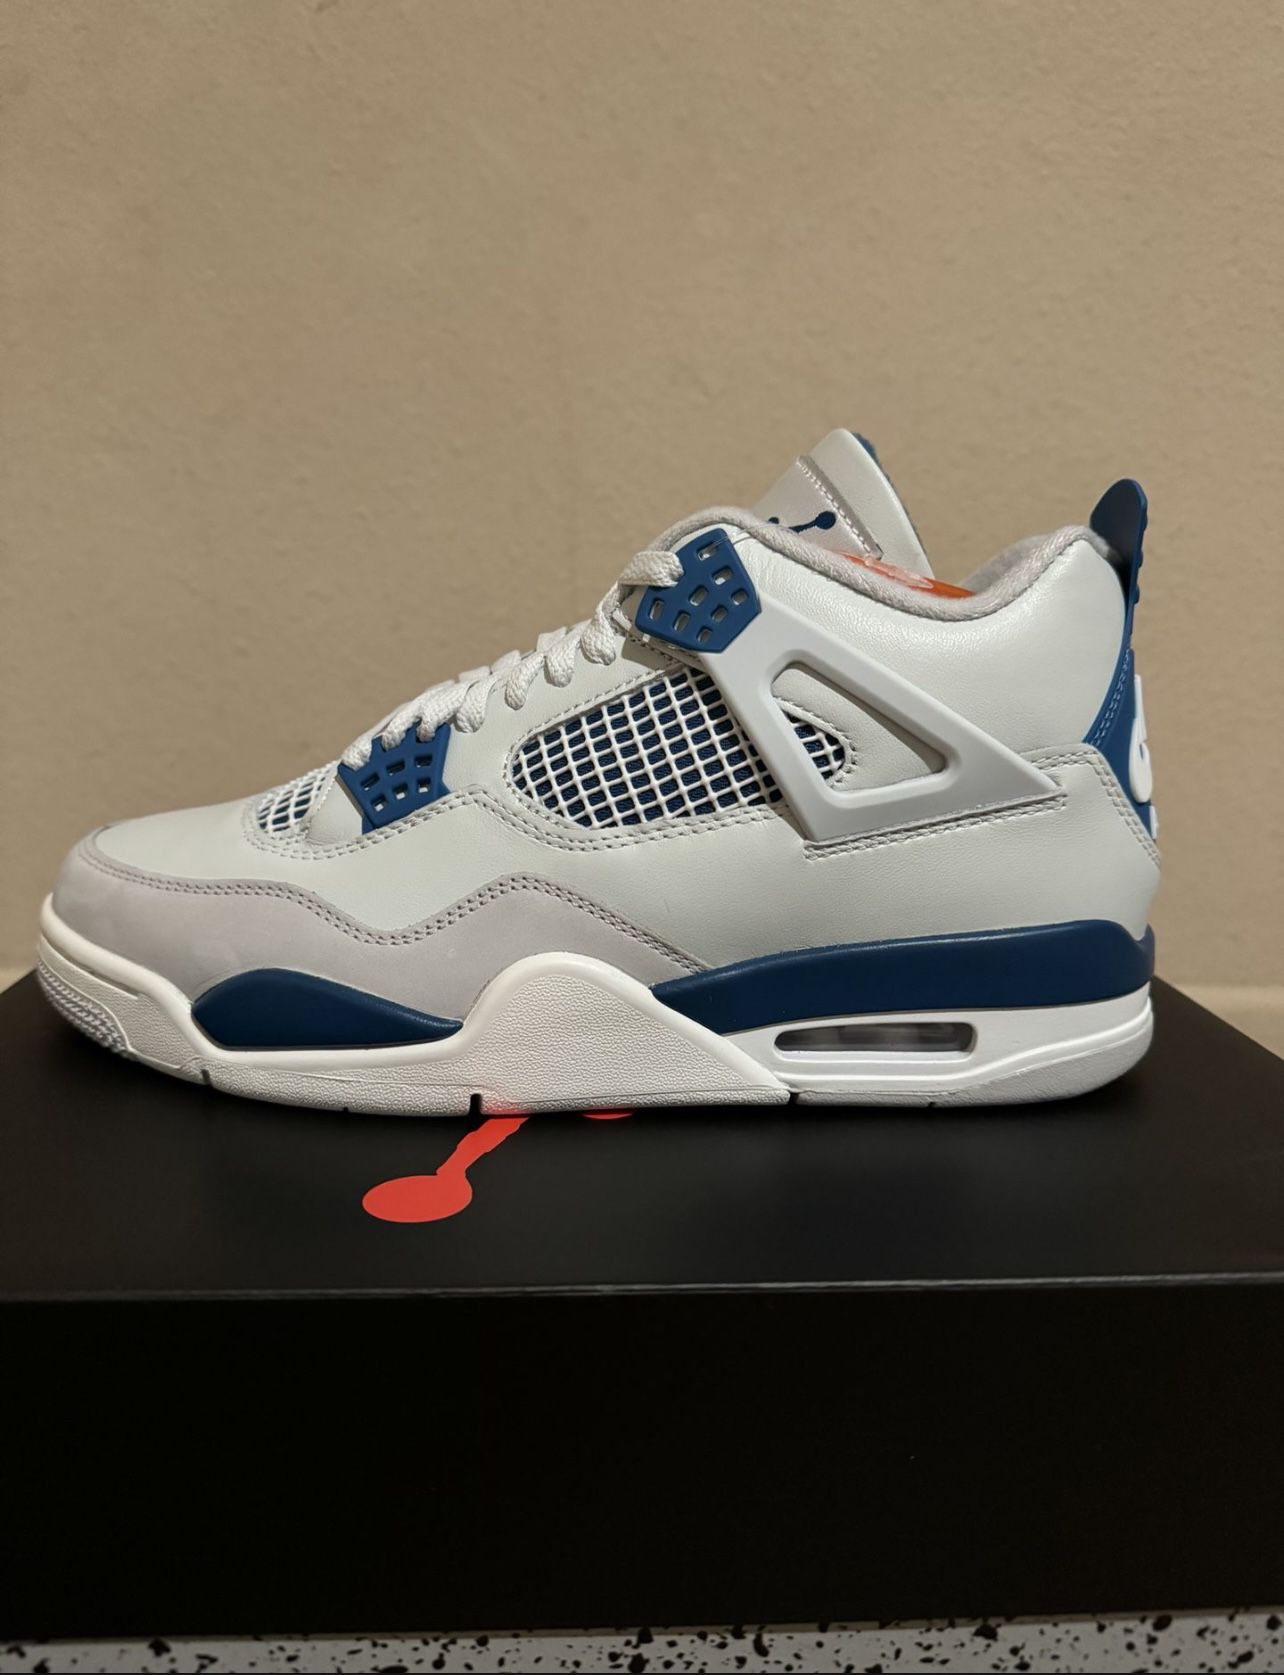 Jordan Retro 4 Industrial Blue / Military Blue Size 9